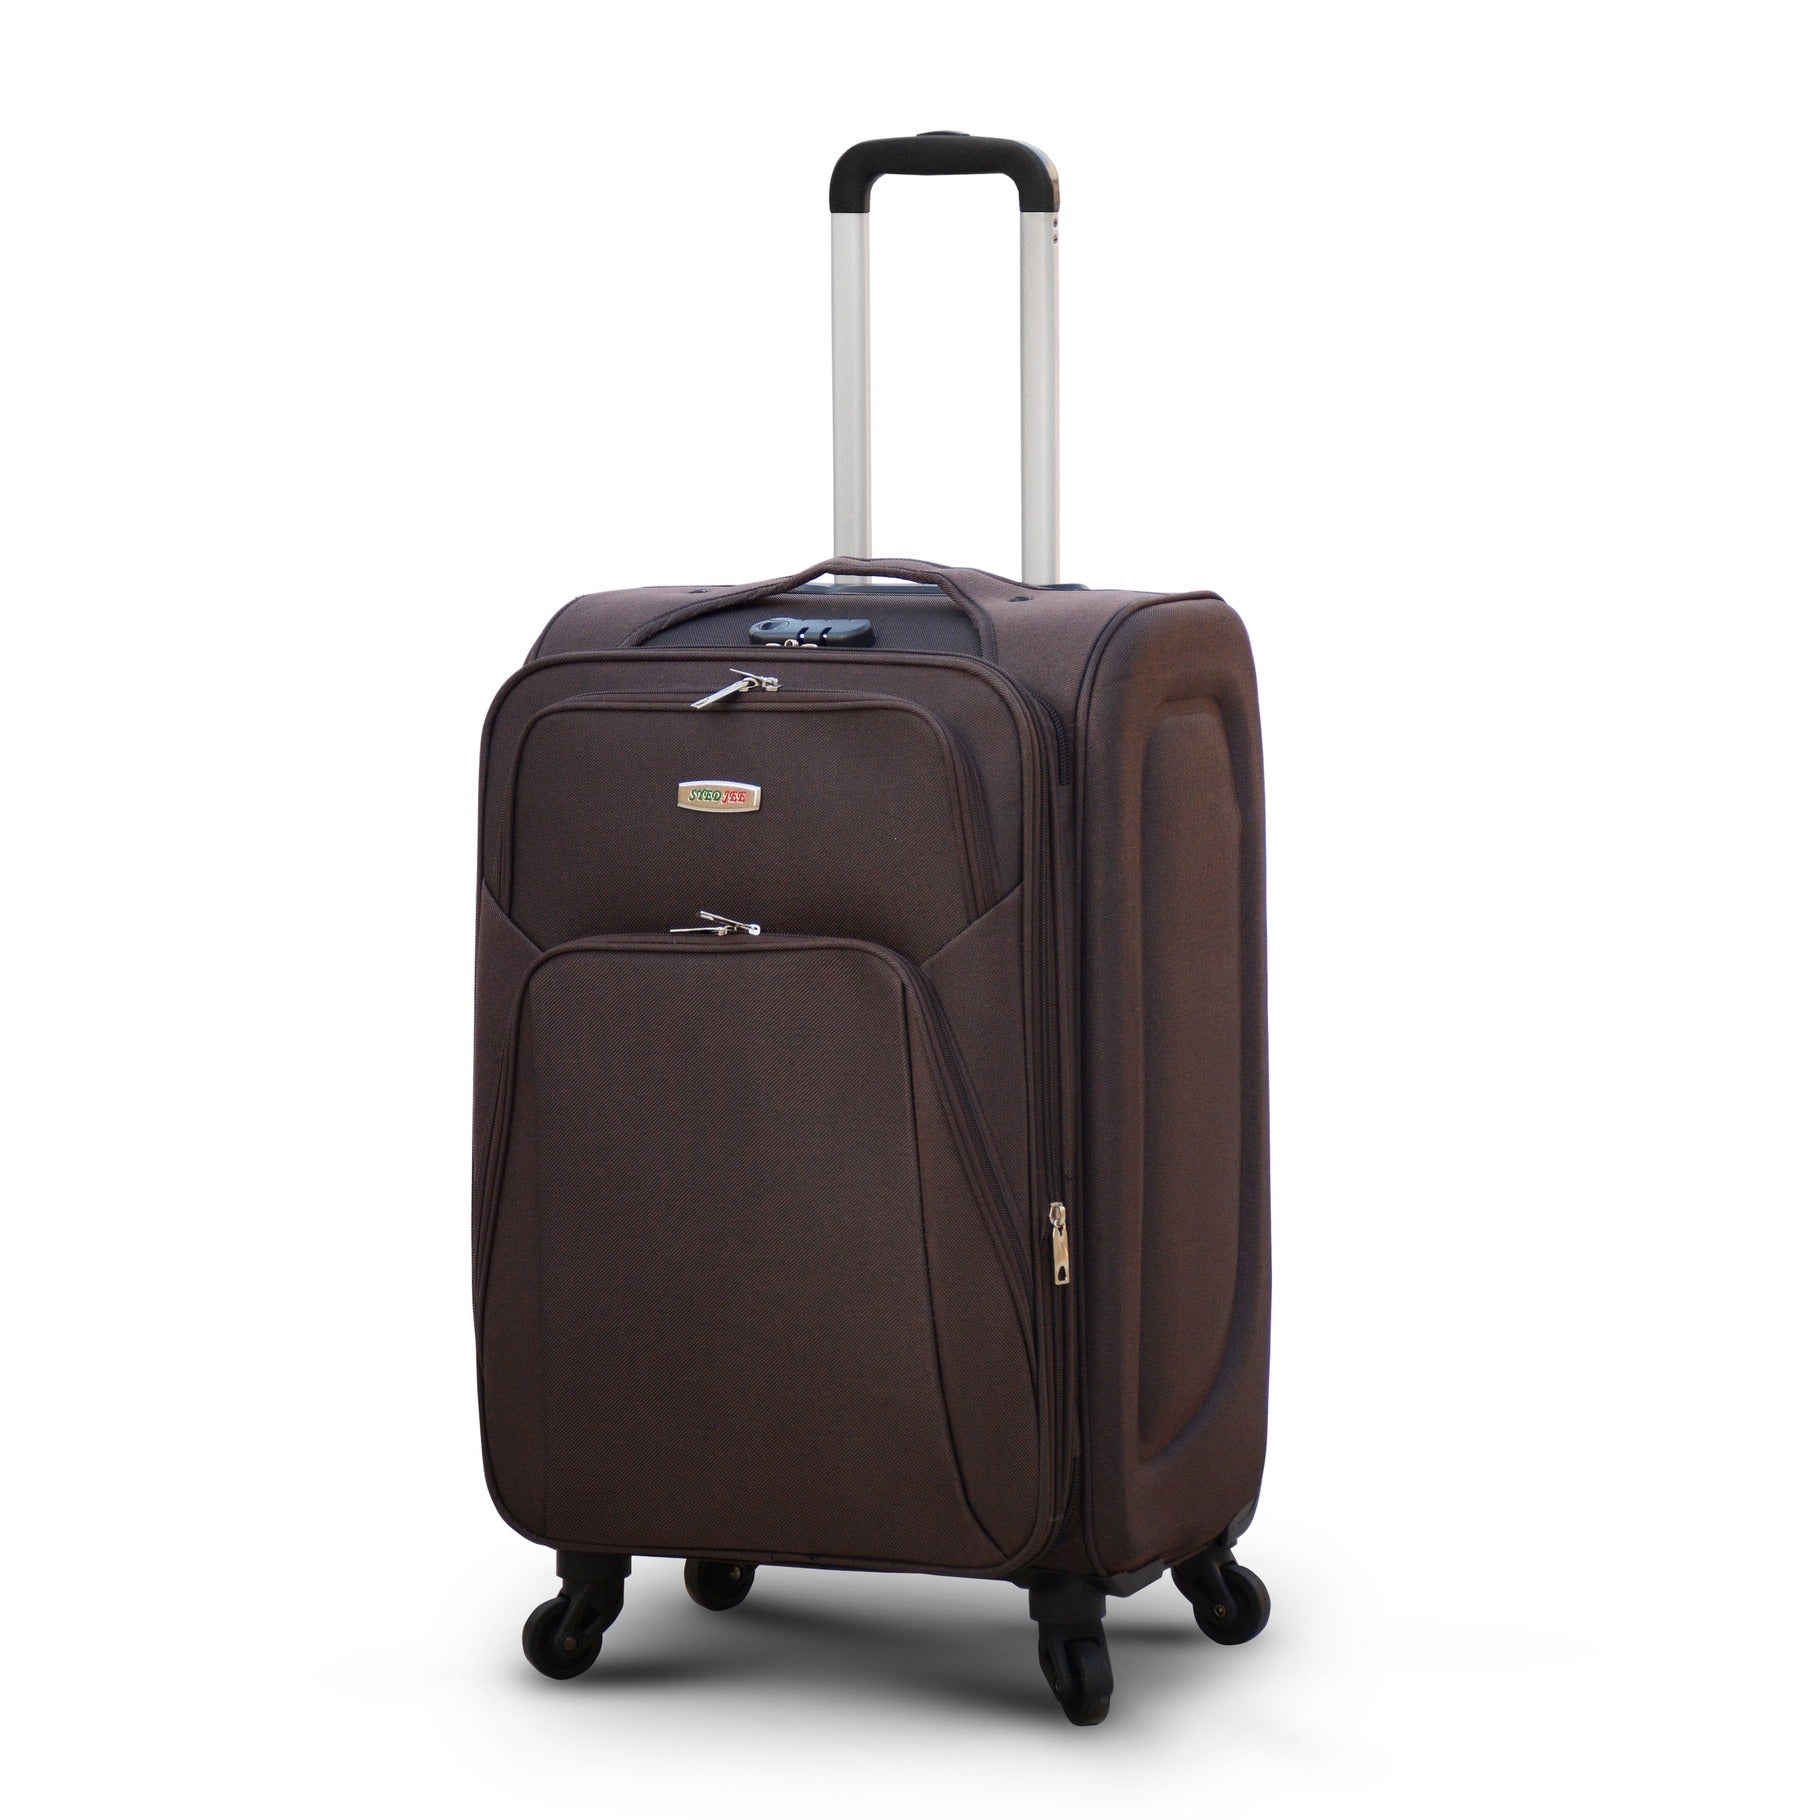 32" SJ JIAN 4 Wheel Lightweight Soft Material Luggage Bag Zaappy